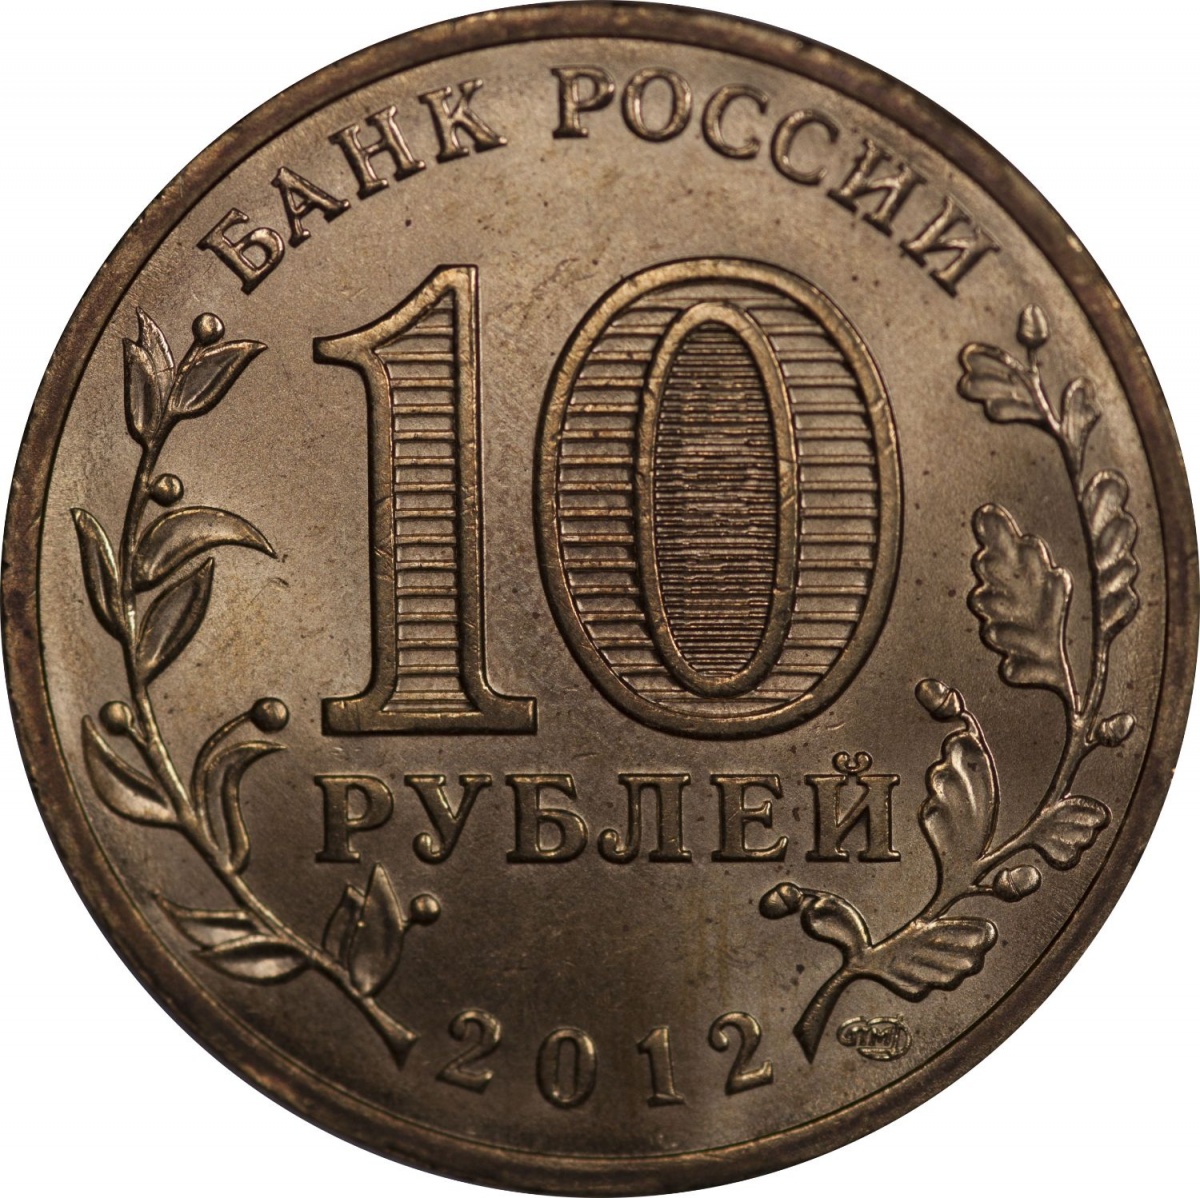 10 рублевая монета 2012